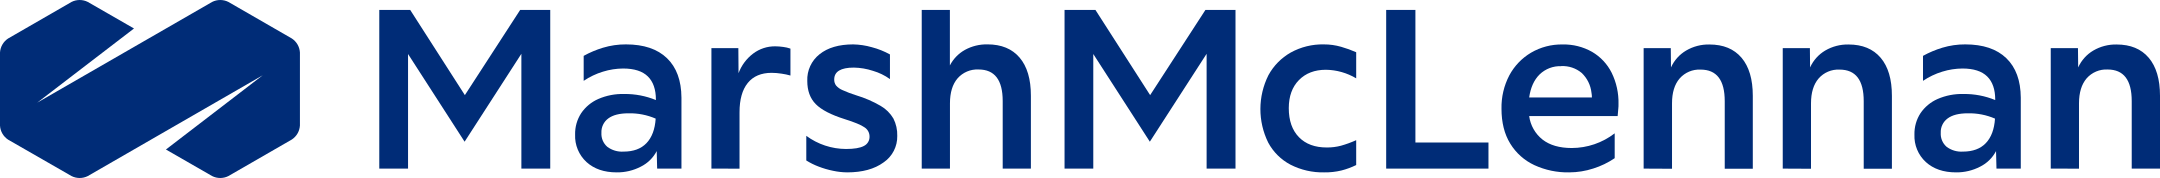 marsh mclennan logo 1 - Marsh & McLennan Logo